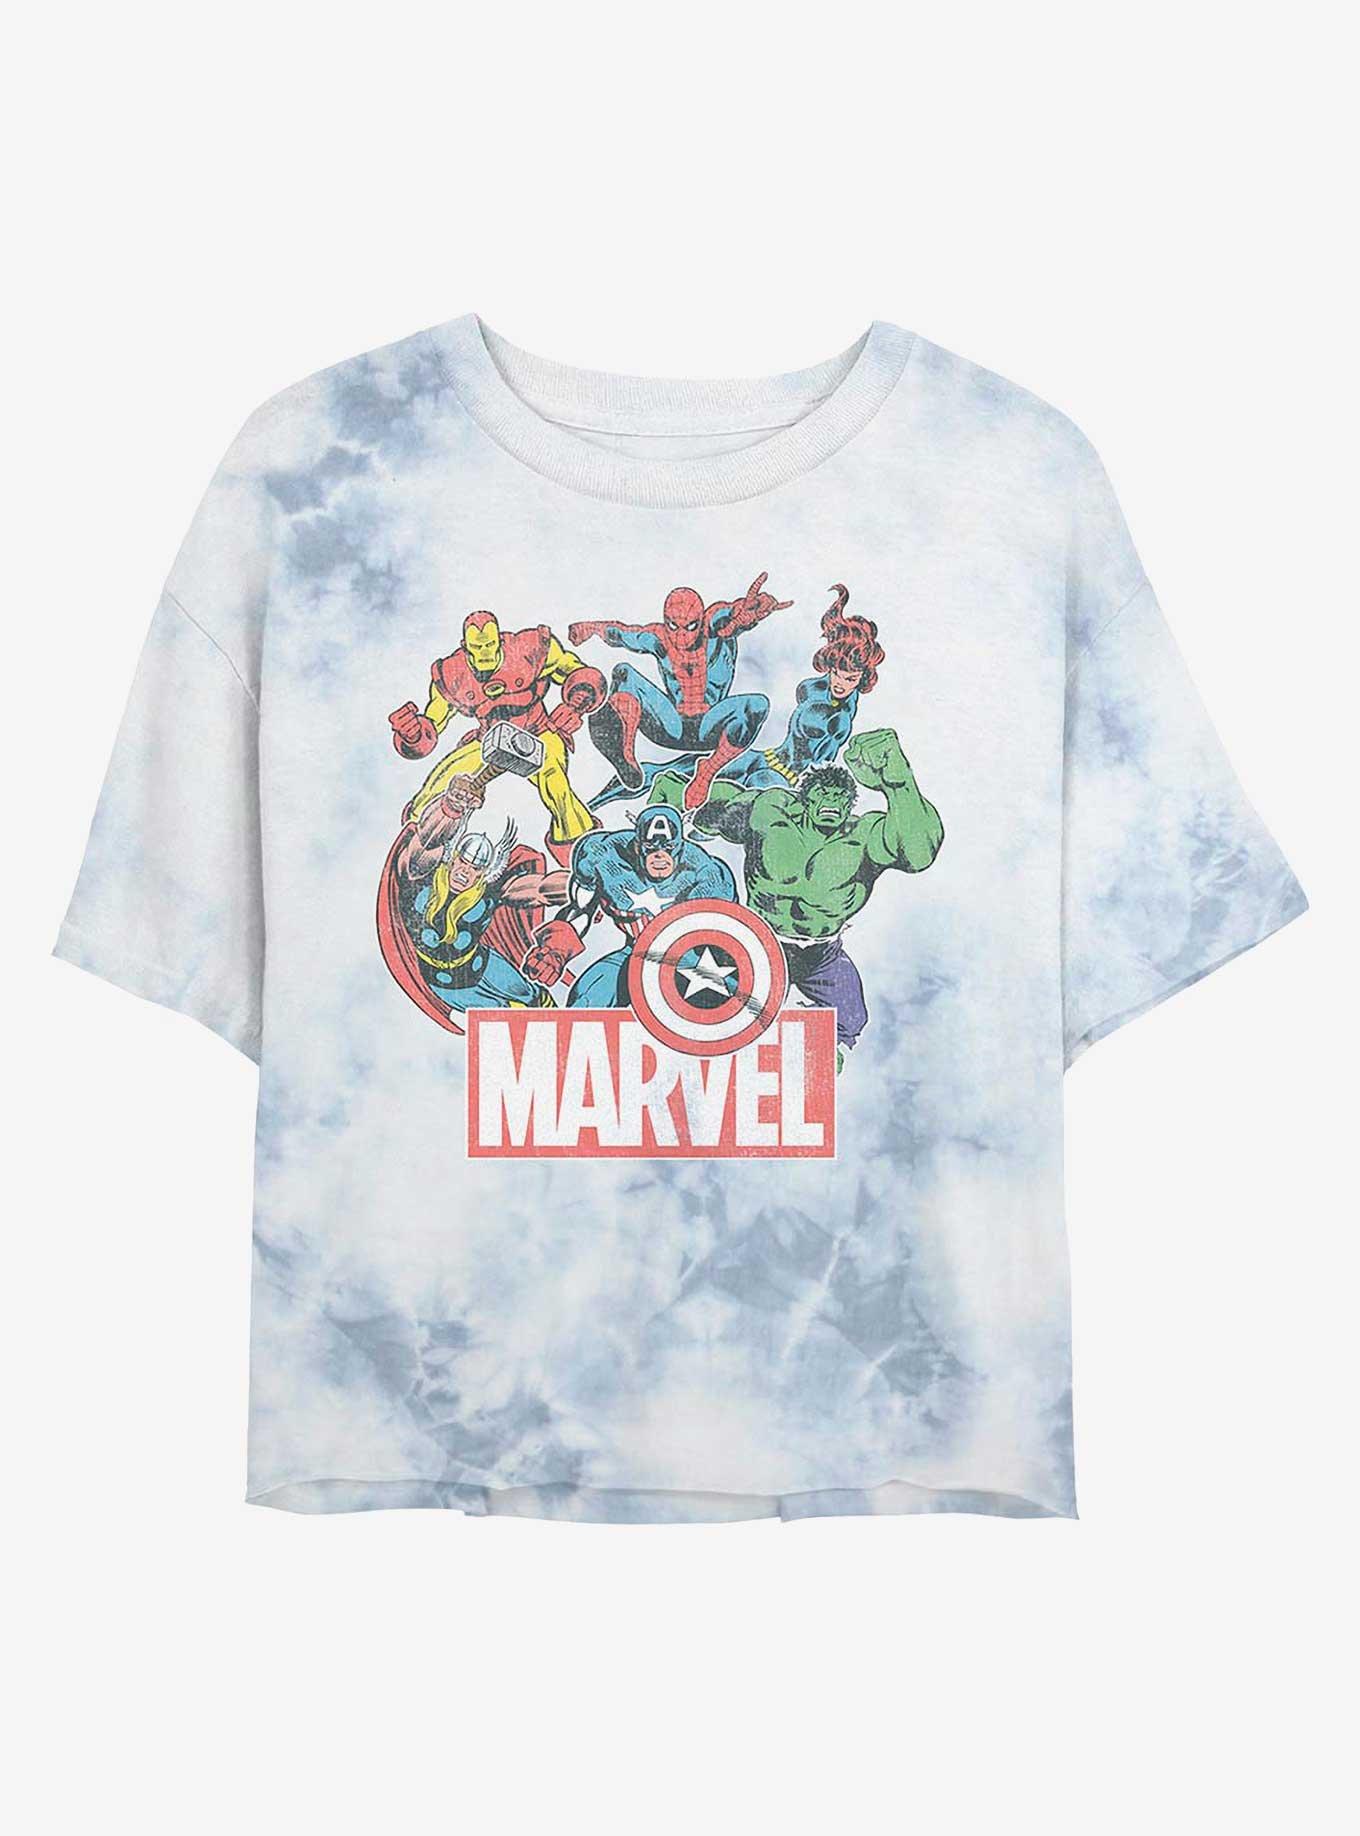 Marvel Avengers Heroes Of Today Womens Tie-Dye Crop T-Shirt, WHITEBLUE, hi-res